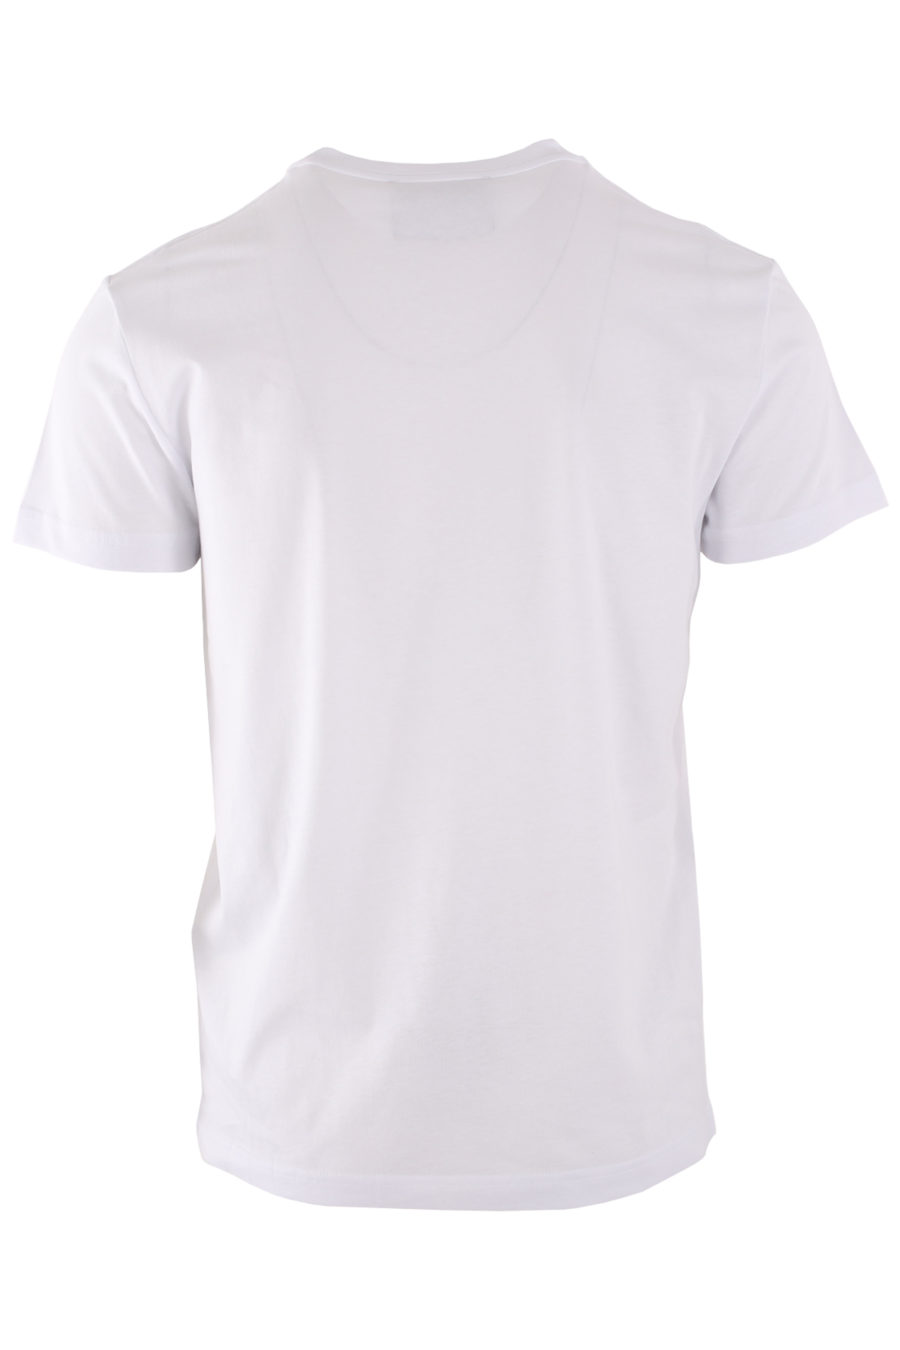 Camiseta blanca con logo plateado - IMG 8701